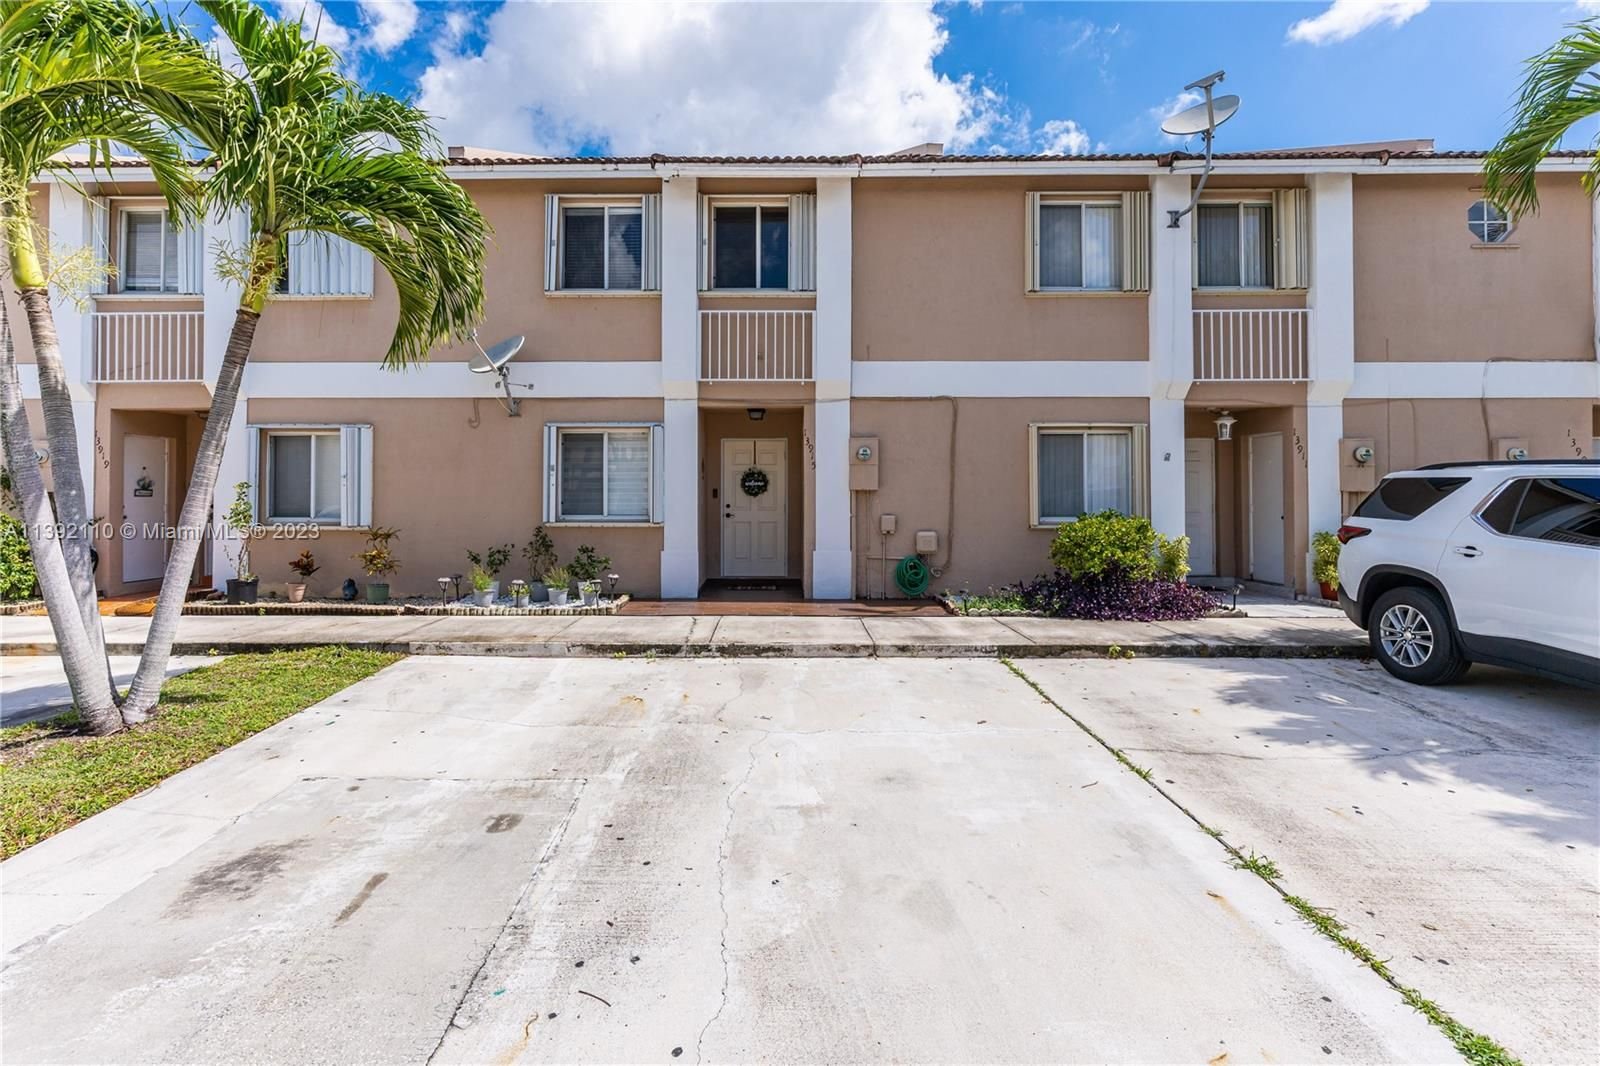 Real estate property located at 13915 177th St #13915, Miami-Dade County, Miami, FL